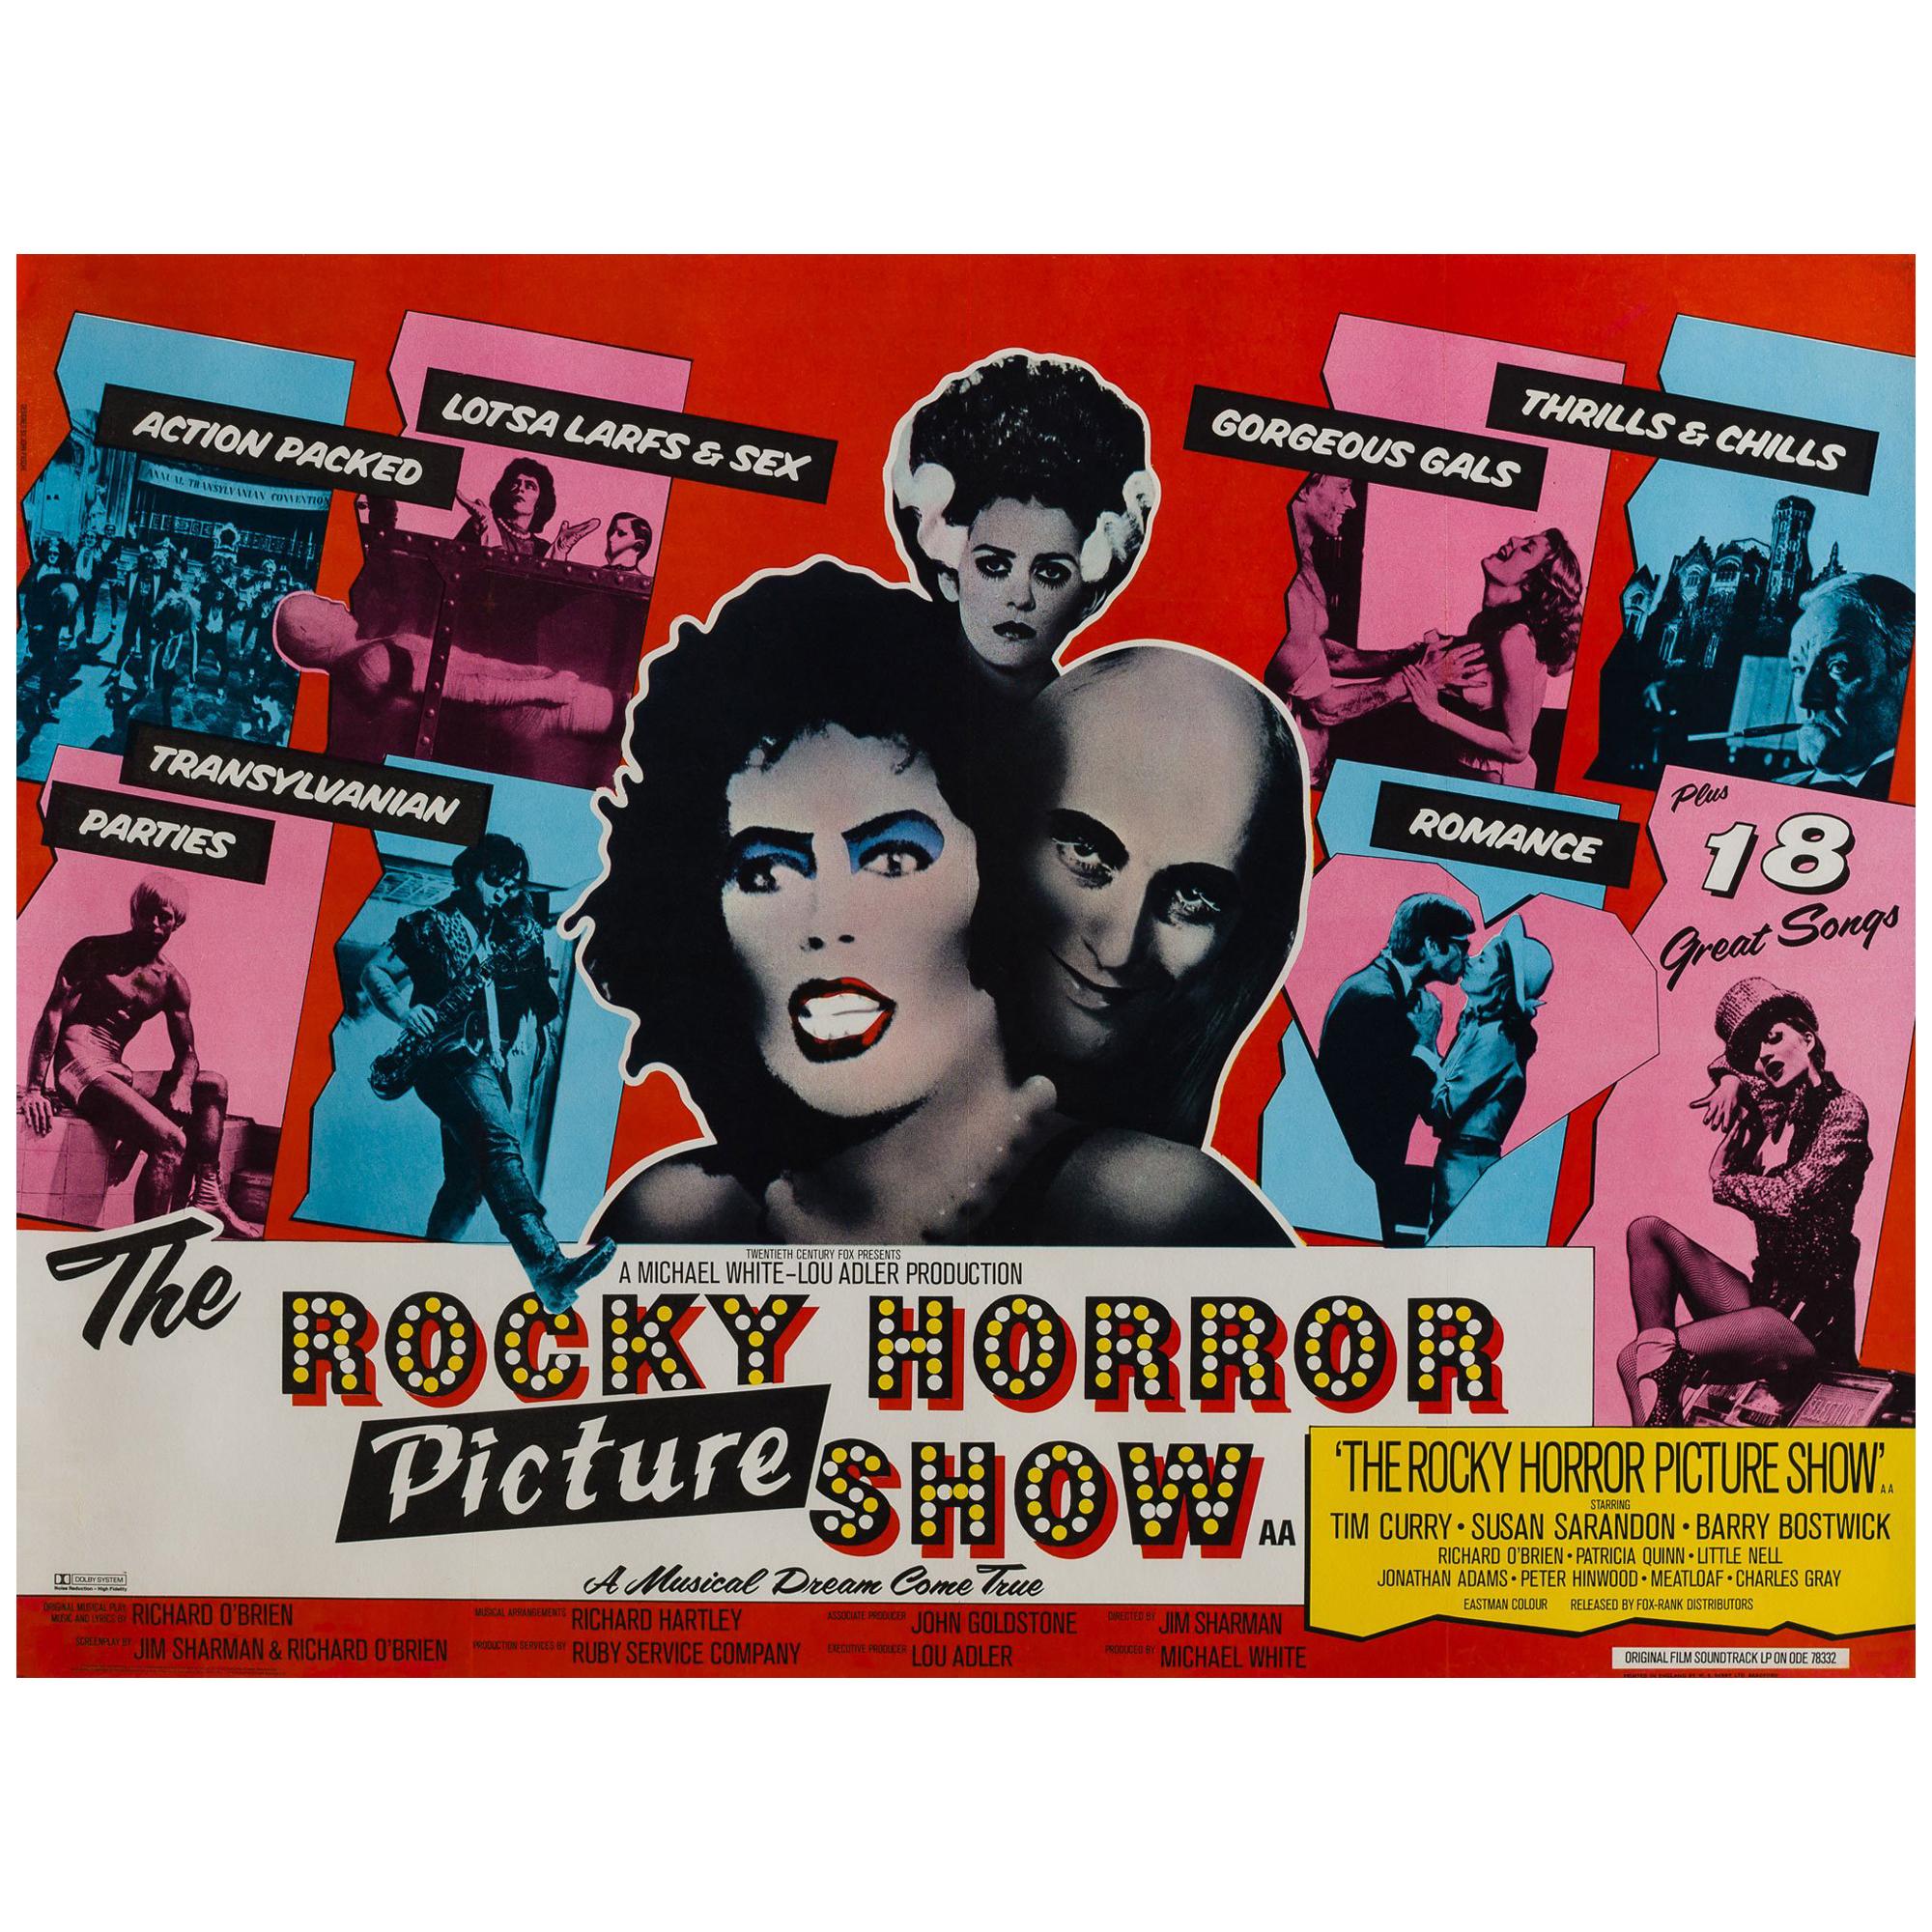 "The Rocky Horror Picture Show" Original British Film Poster, John Pasche, 1975